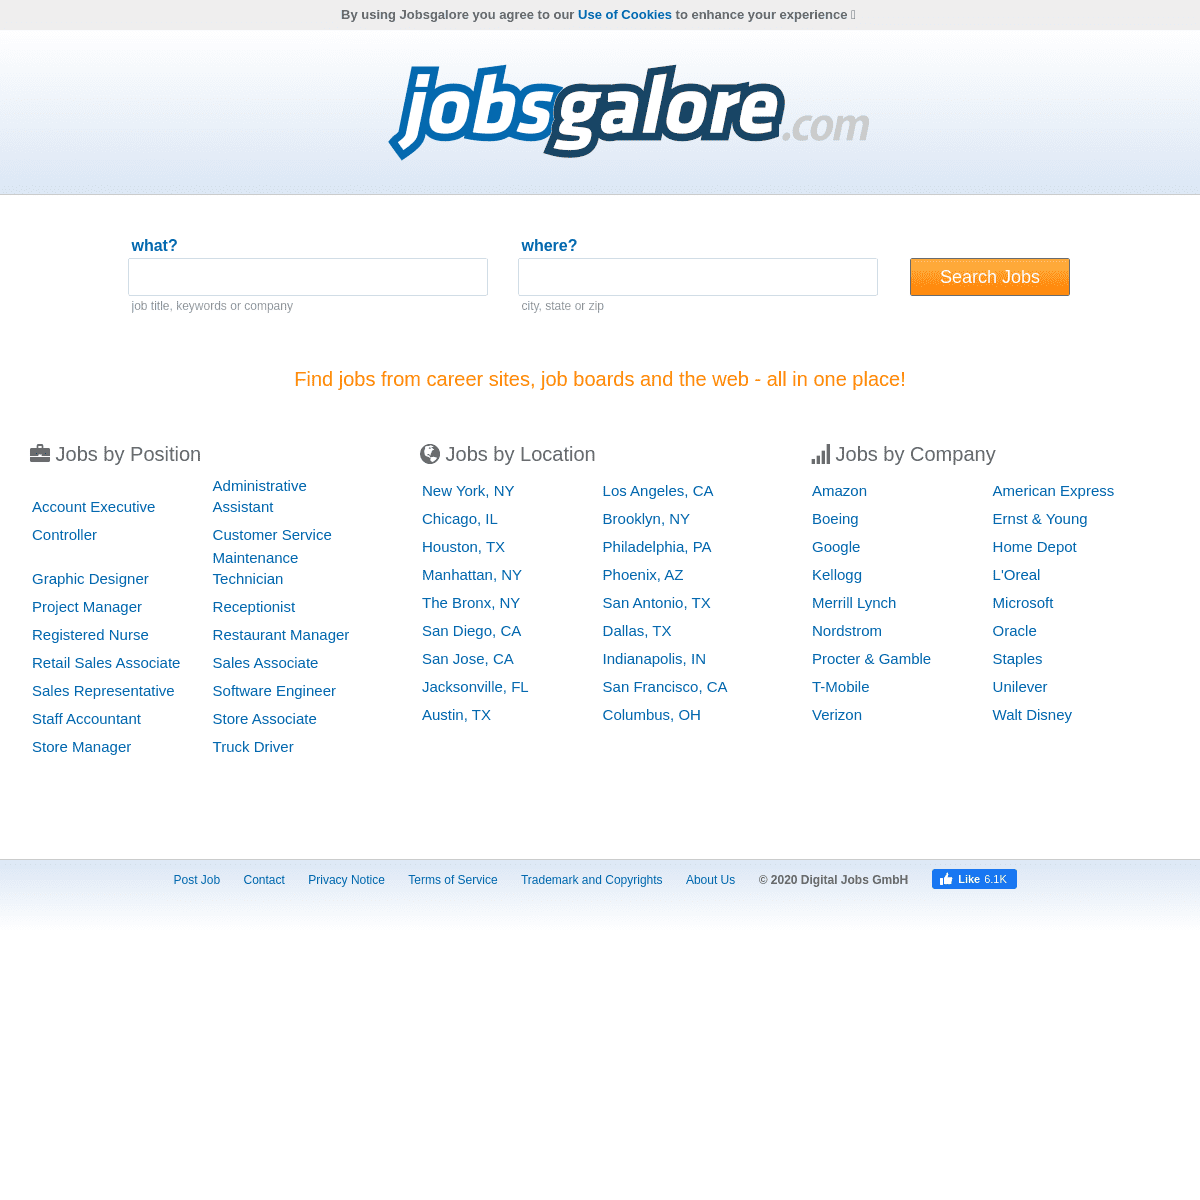 A complete backup of jobsgalore.com